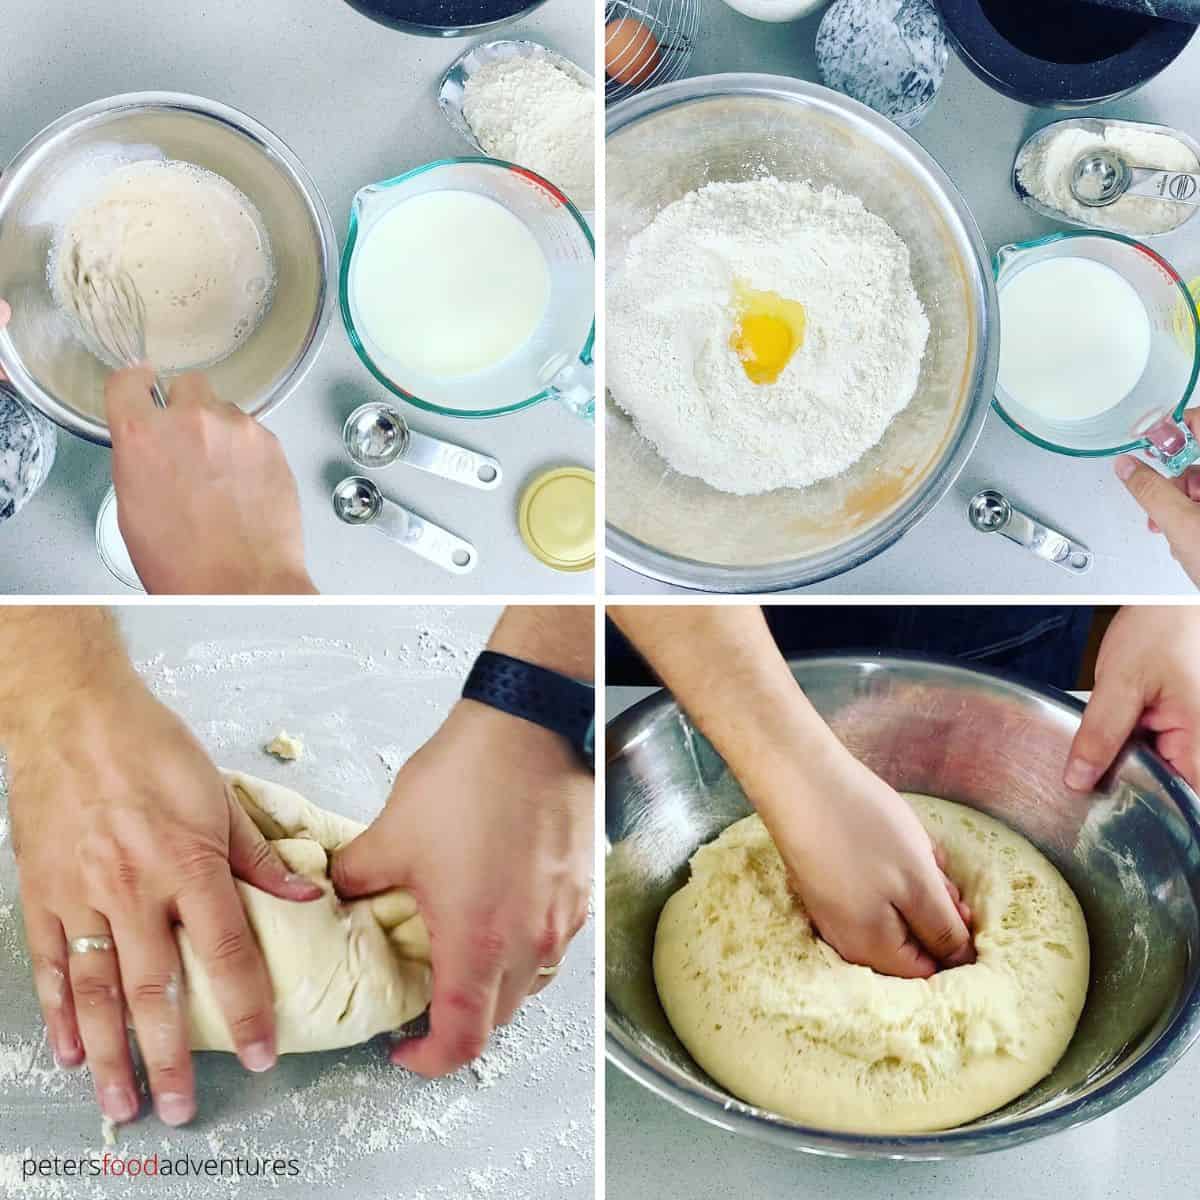 how to make yeast dough